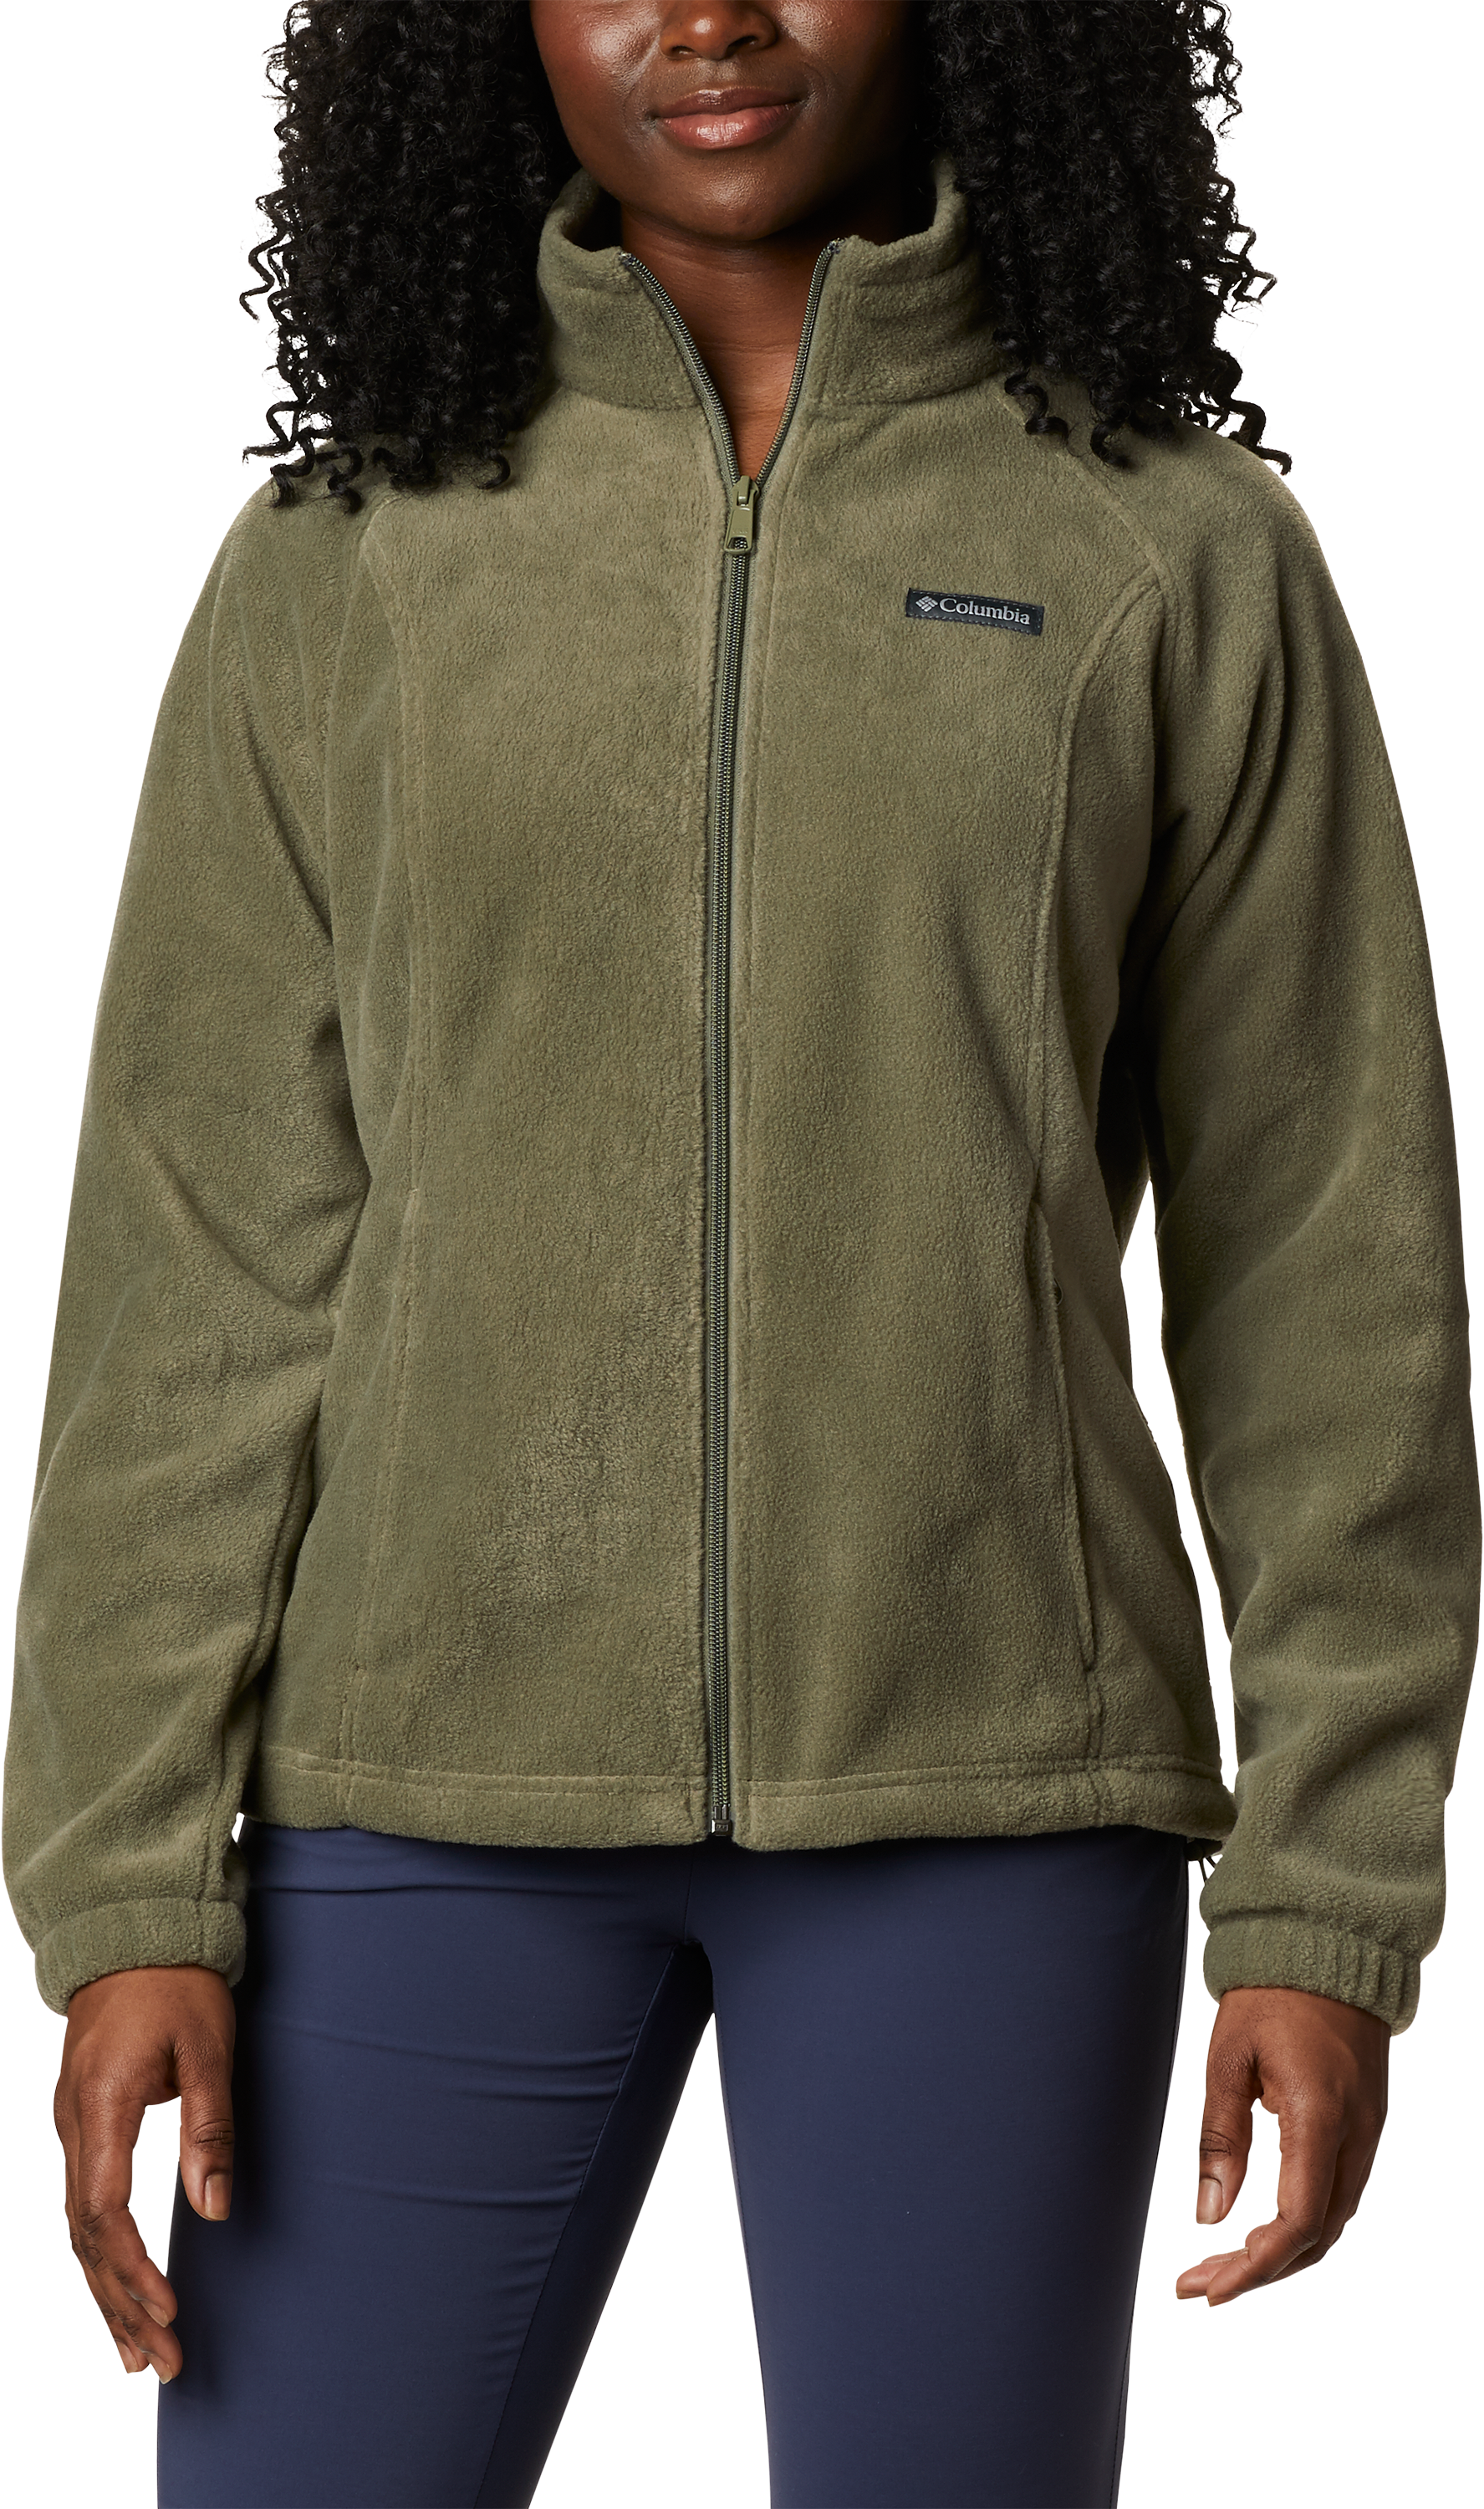 Columbia Benton Springs Full-Zip Fleece Jacket for Ladies - Stone Green - XXL